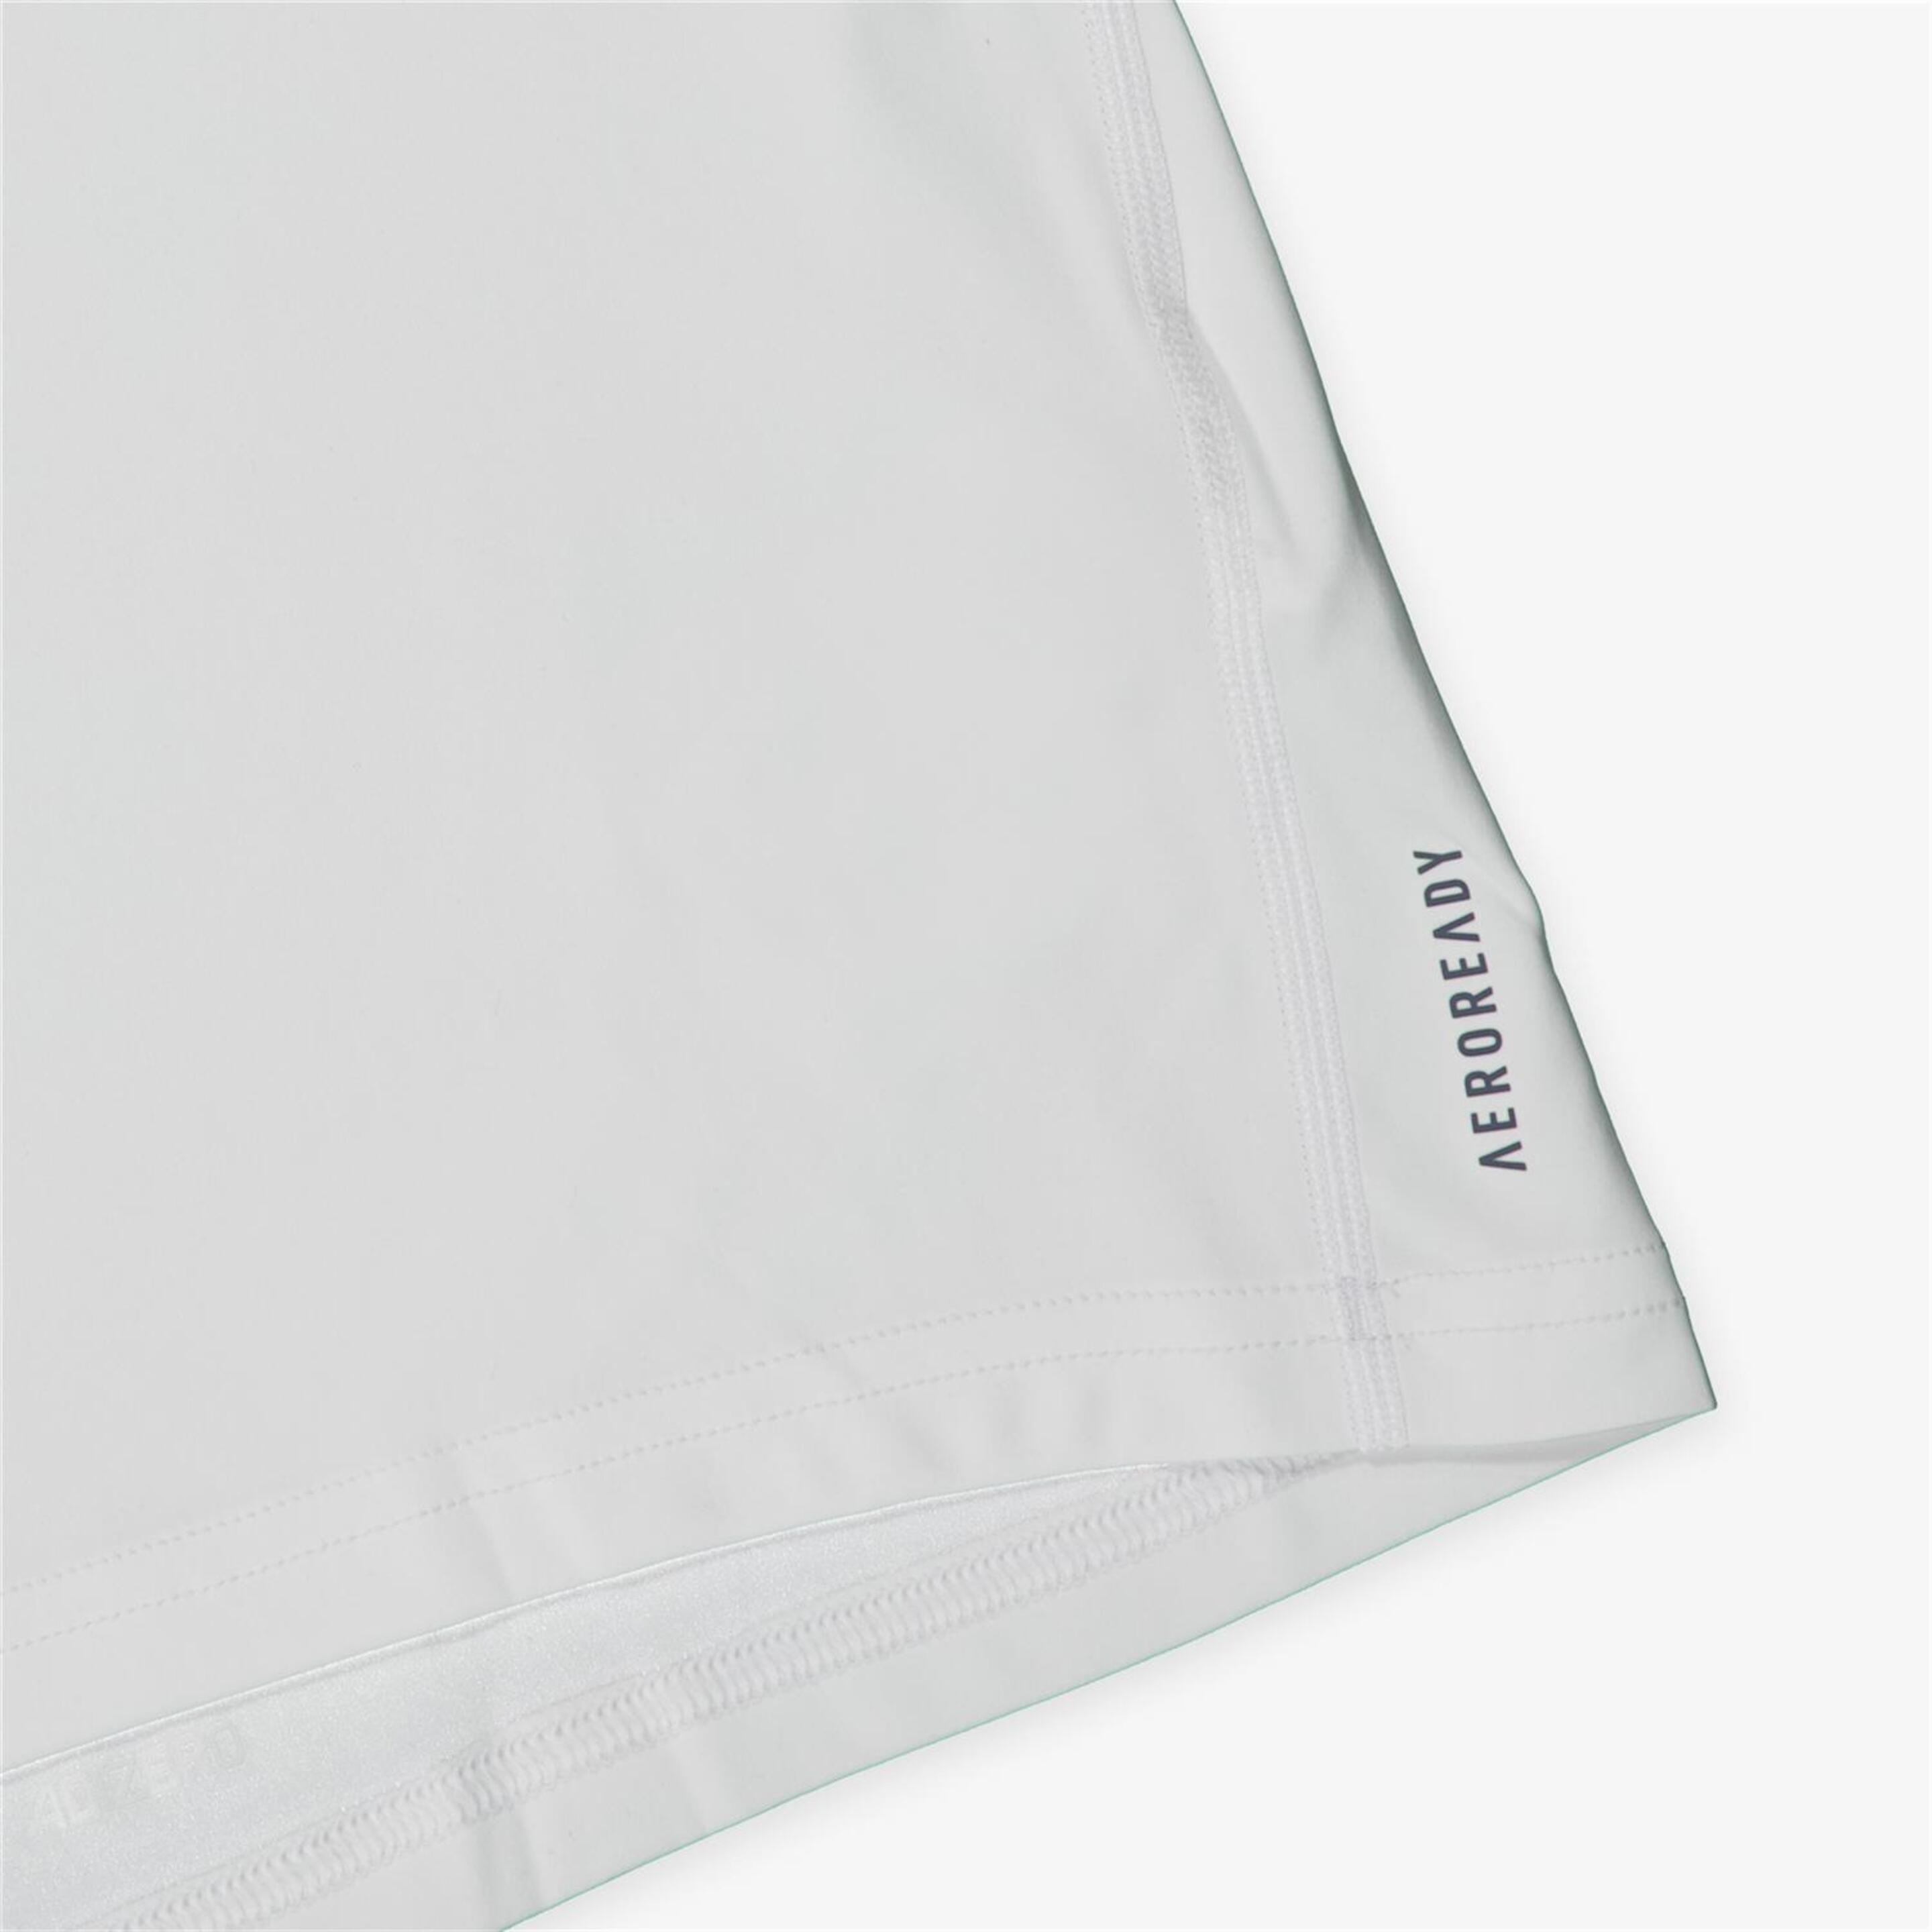 Camiseta adidas - Blanco - Camiseta Running Niño  | Sprinter